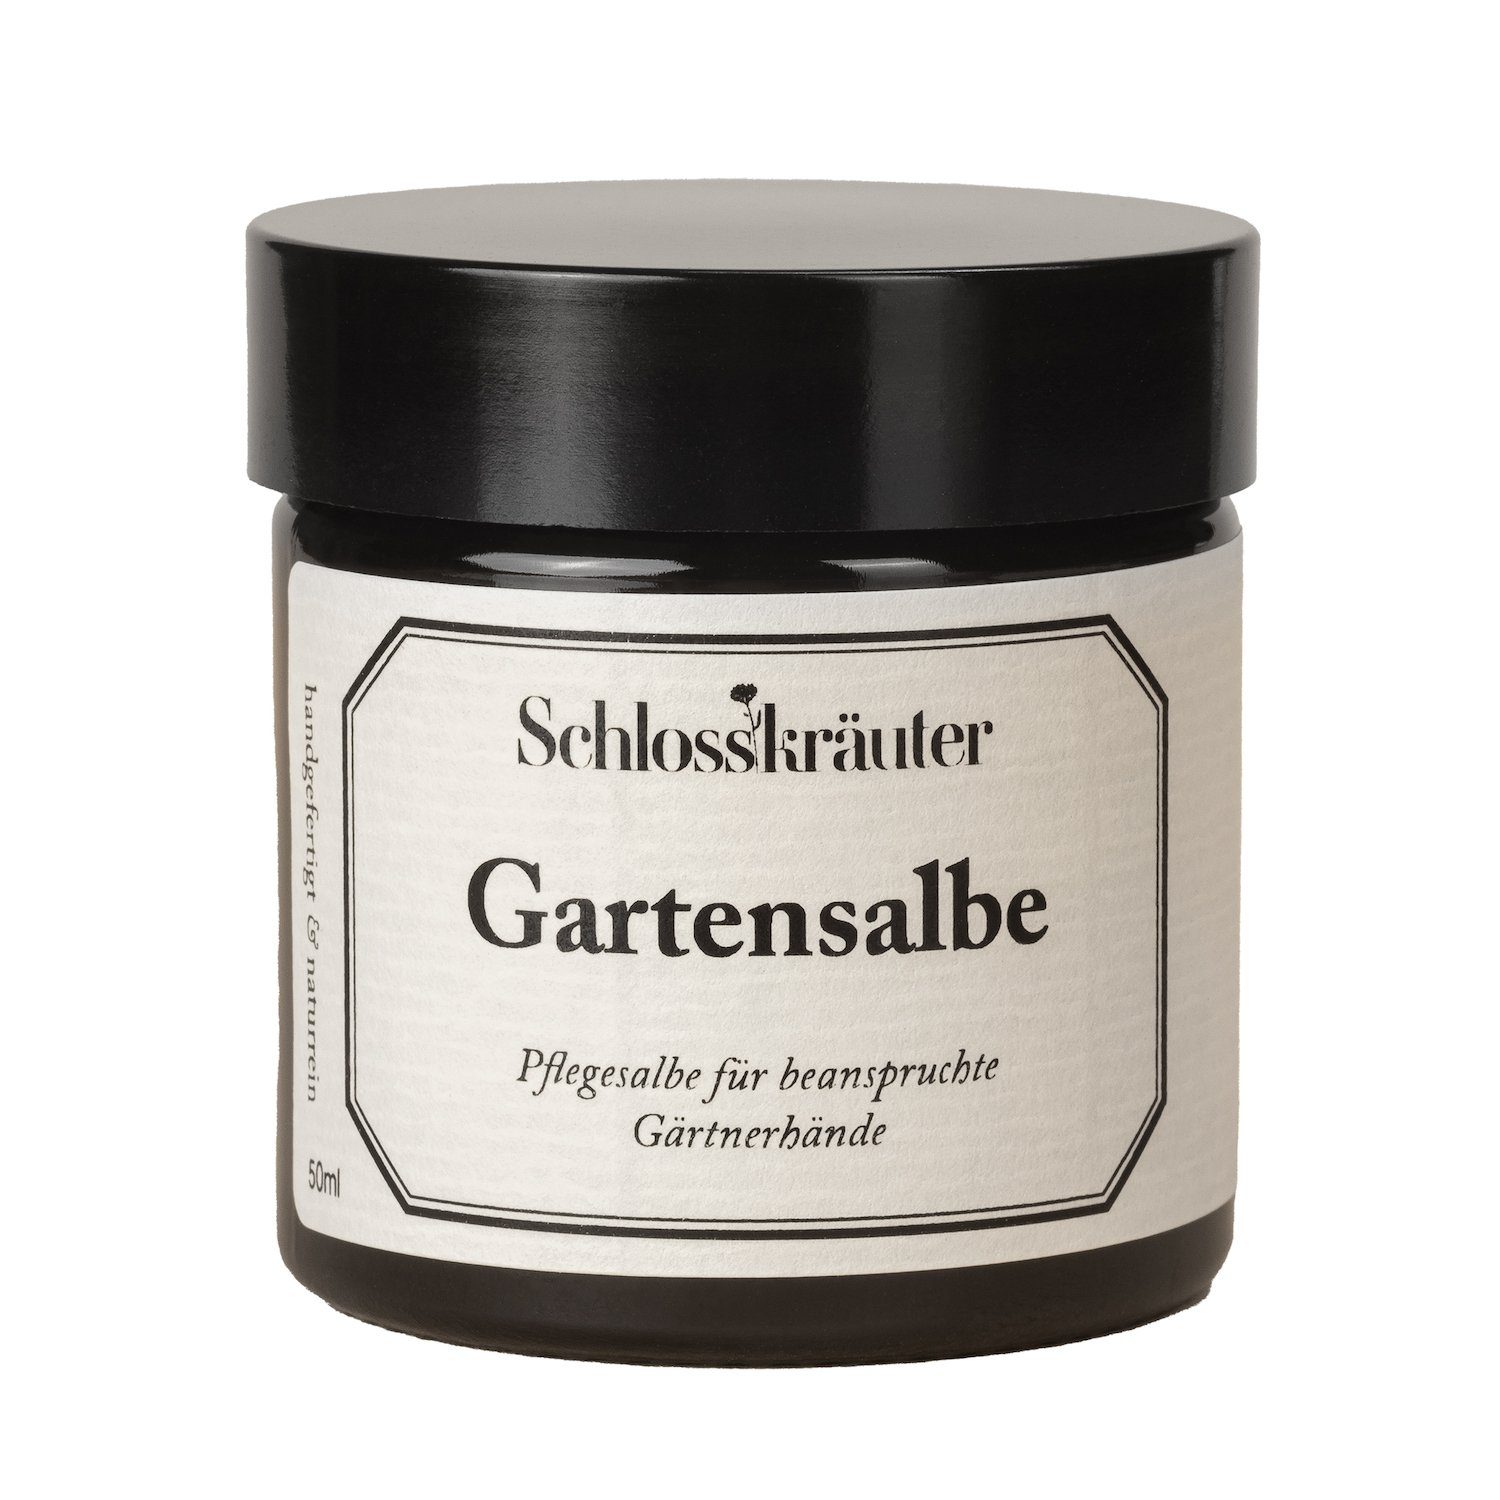 Schlosskräuter Handcreme 50ml Gartensalbe